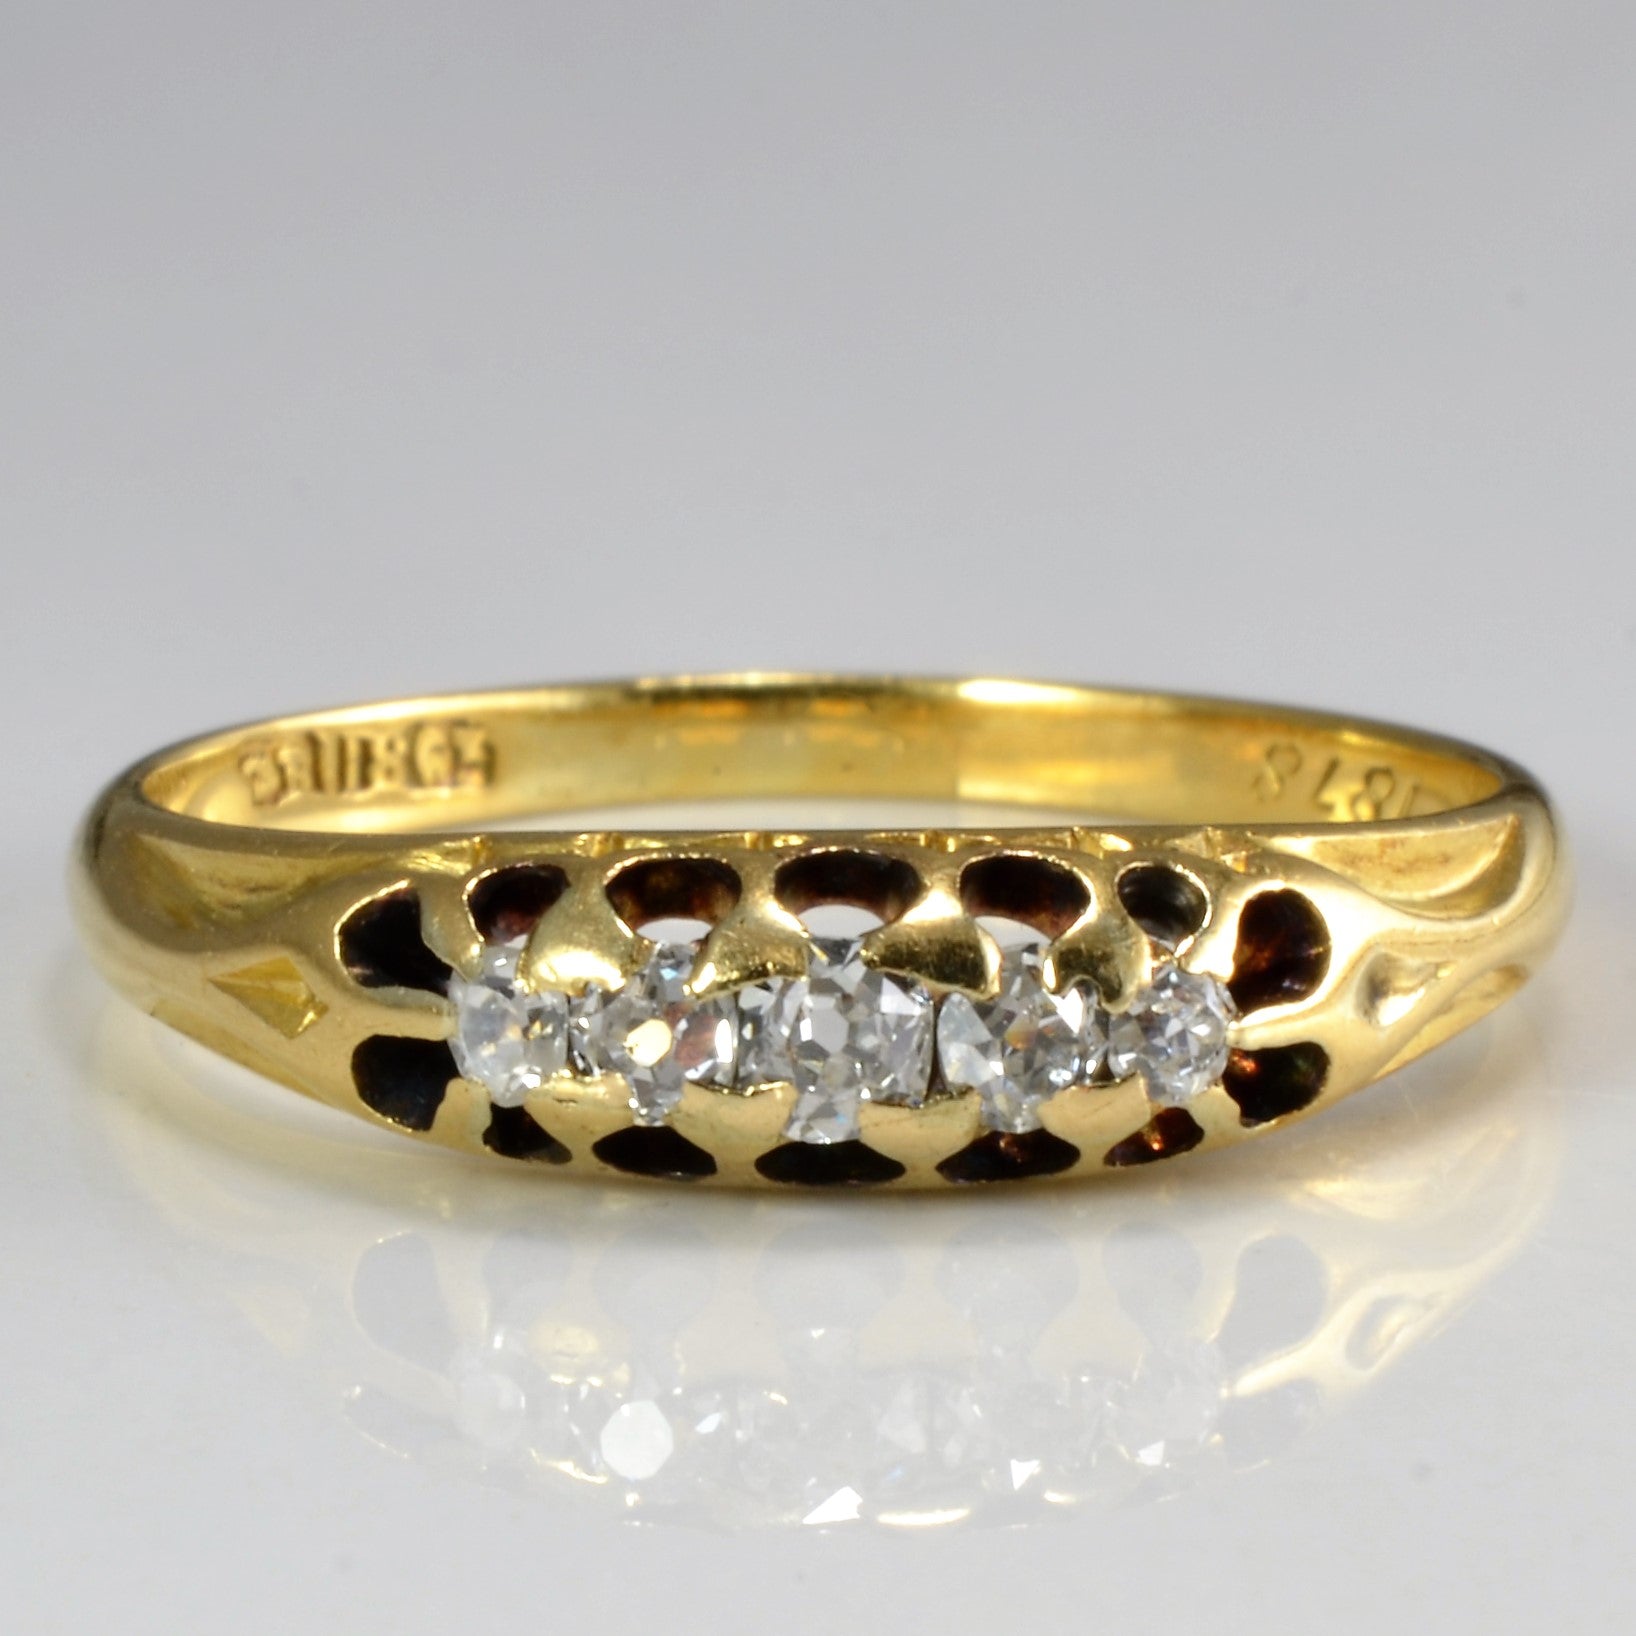 Circa 1878 Victorian Era Diamond Ring | 0.25 ctw, SZ 7.75 |